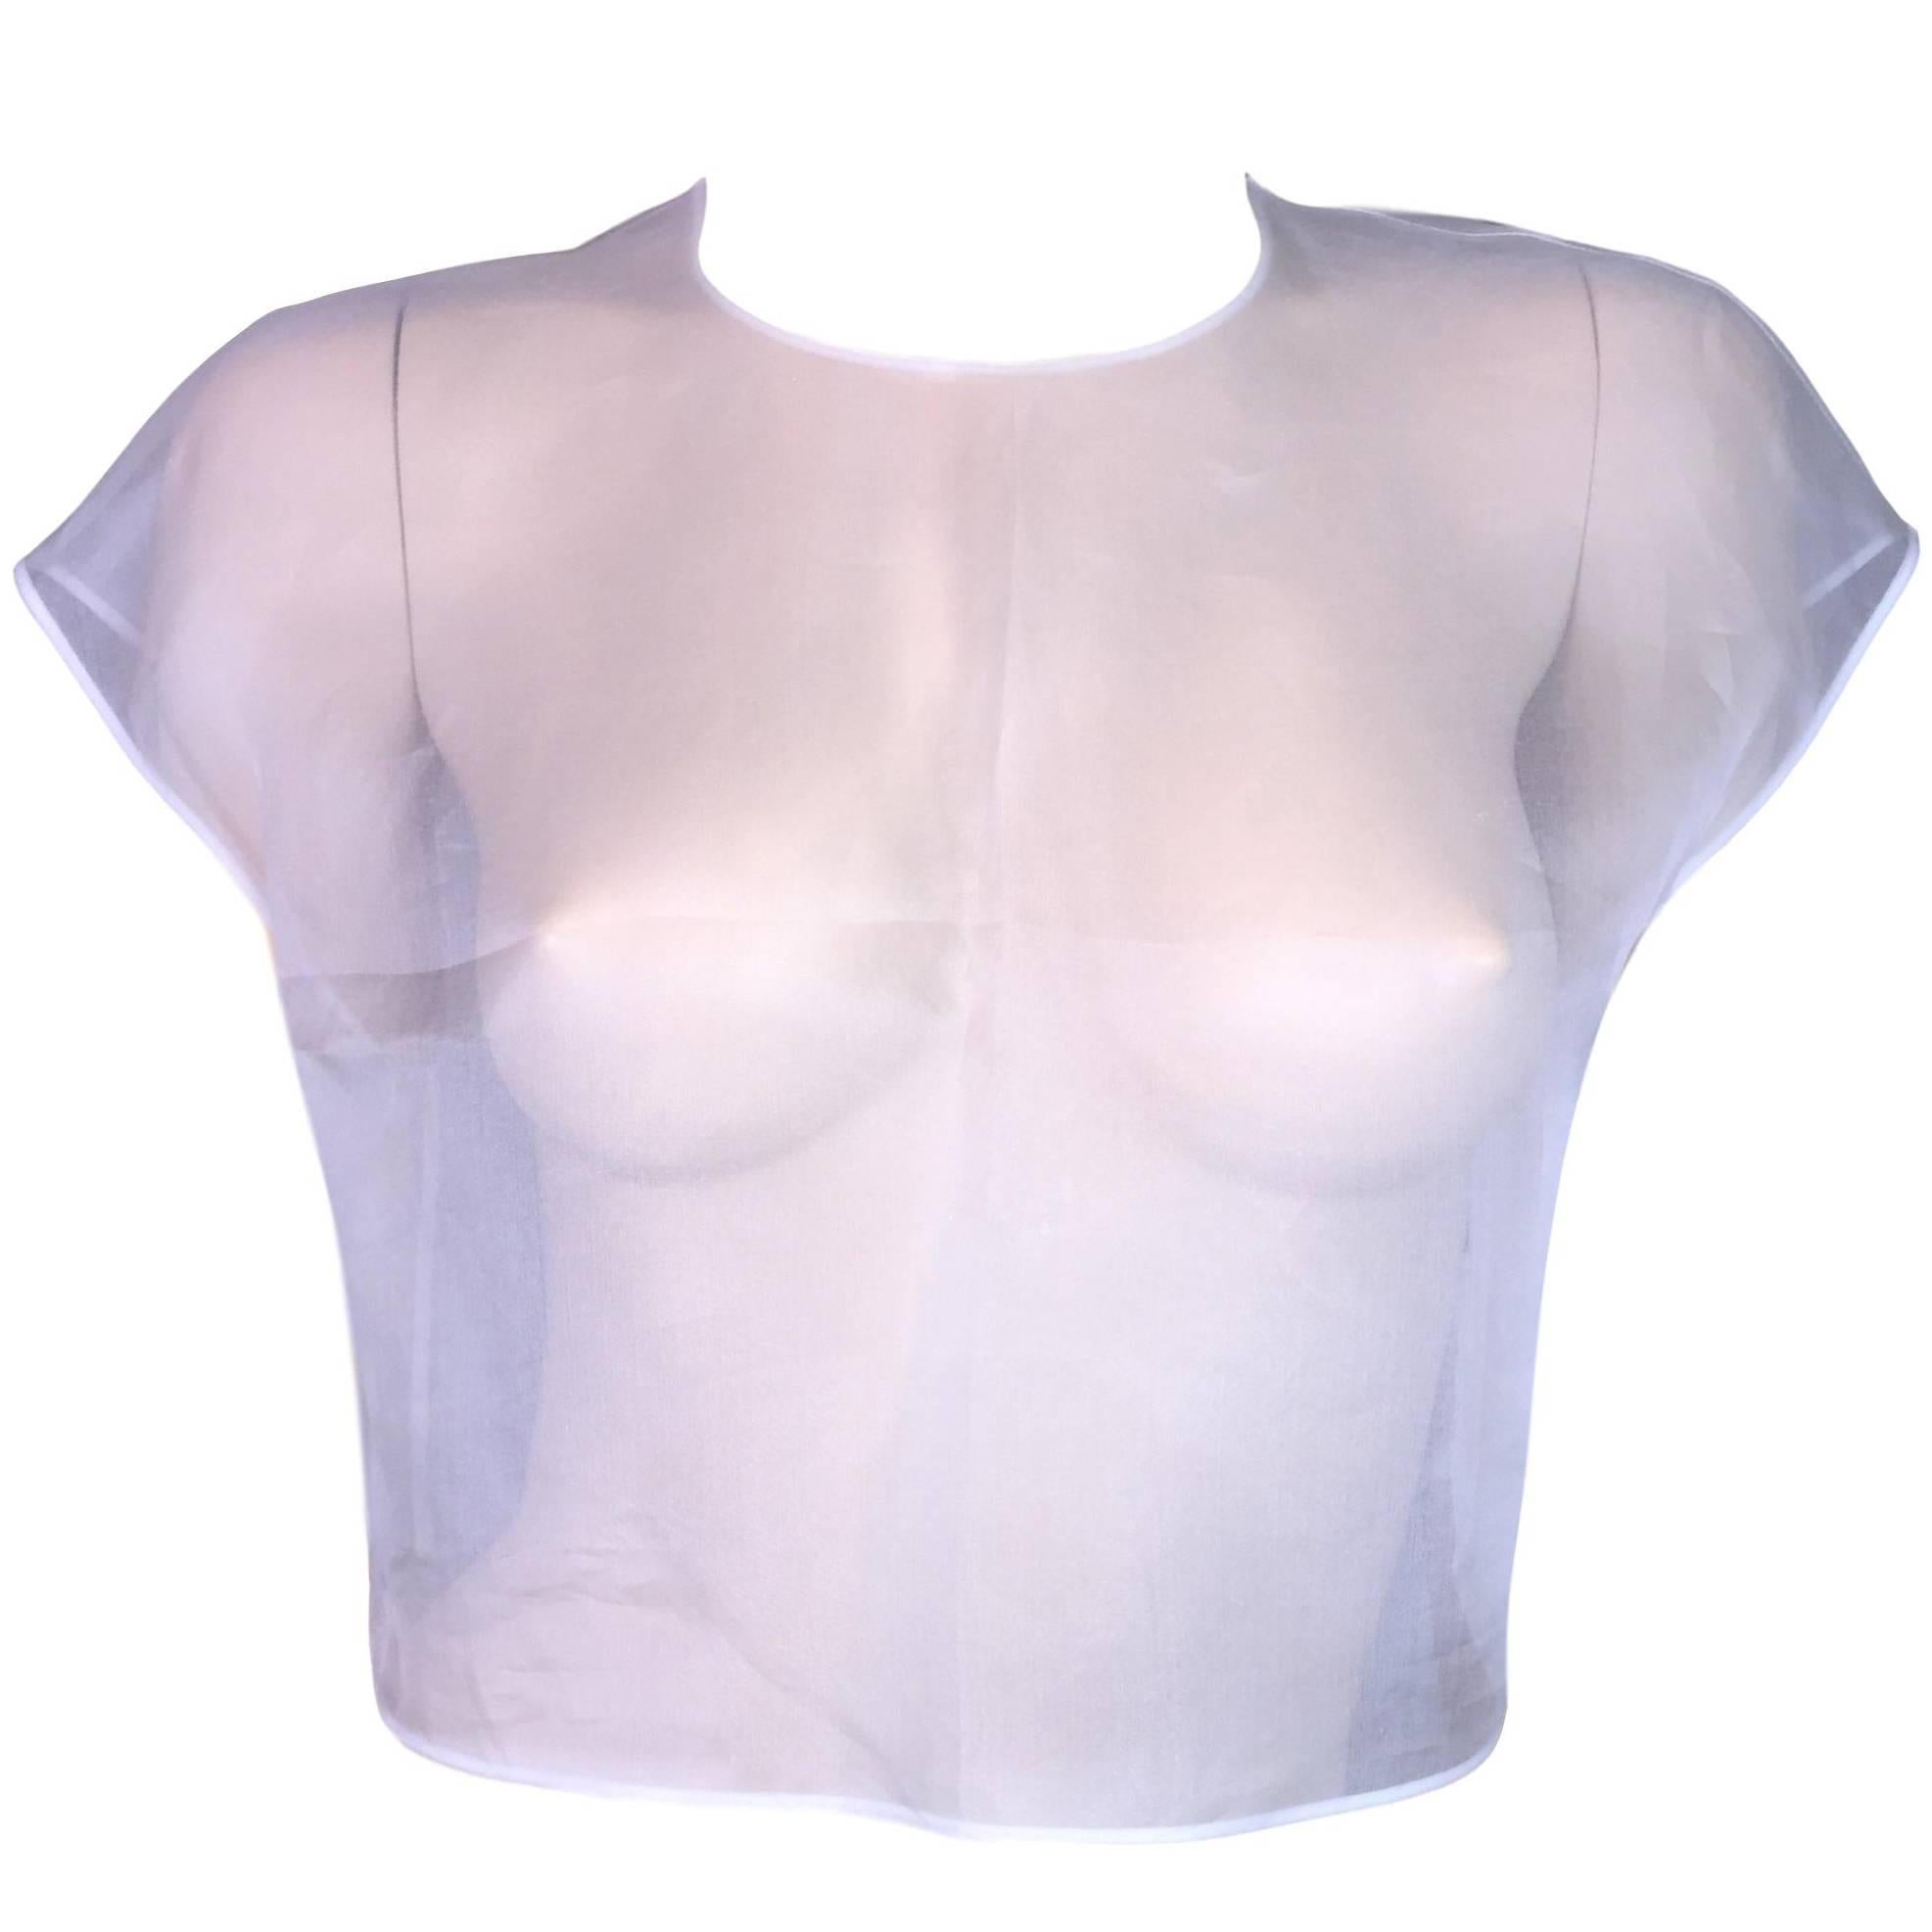 S/S 2014 Fendi Runway Sheer White Organza Silk Cropped Top Blouse